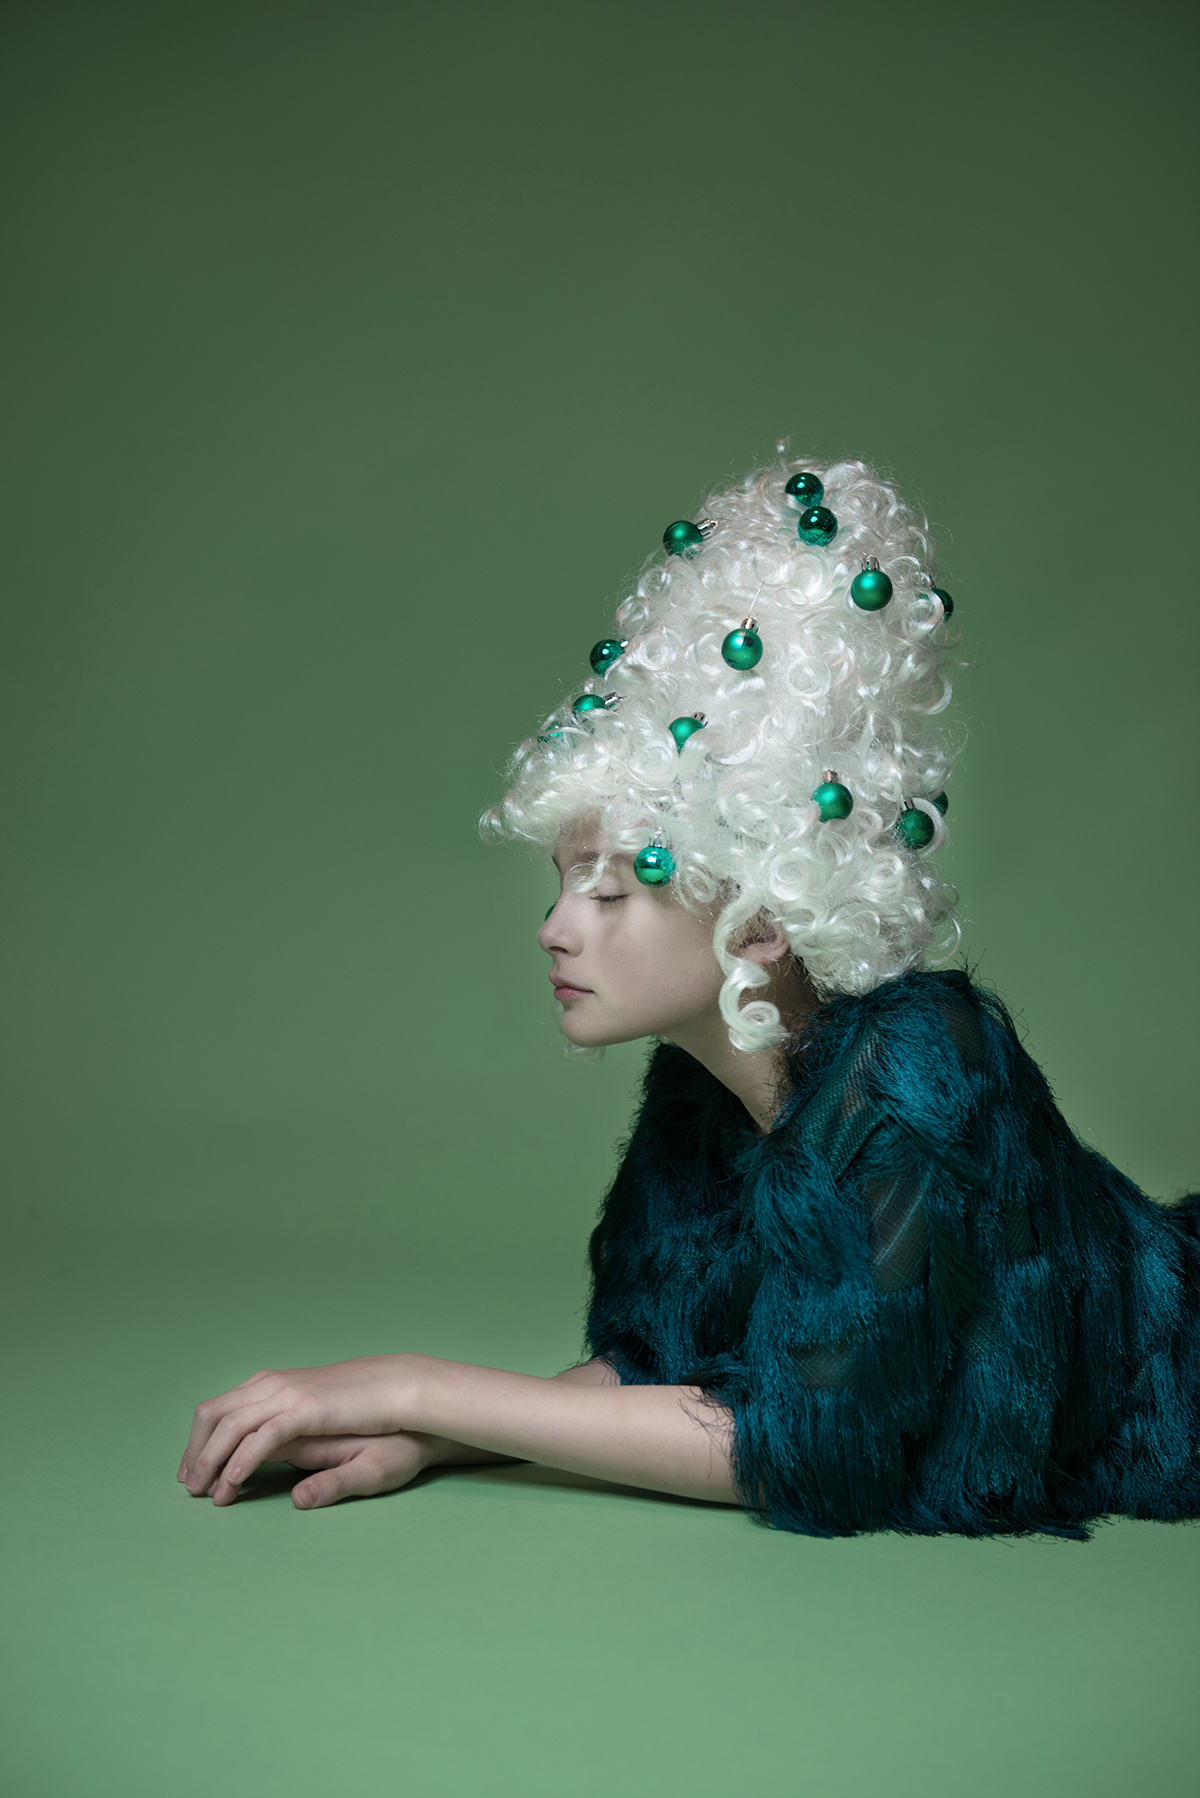 Christmas girl dress green hair art fashionart PhotoVogue conceptual vintage Style hands face White gallery